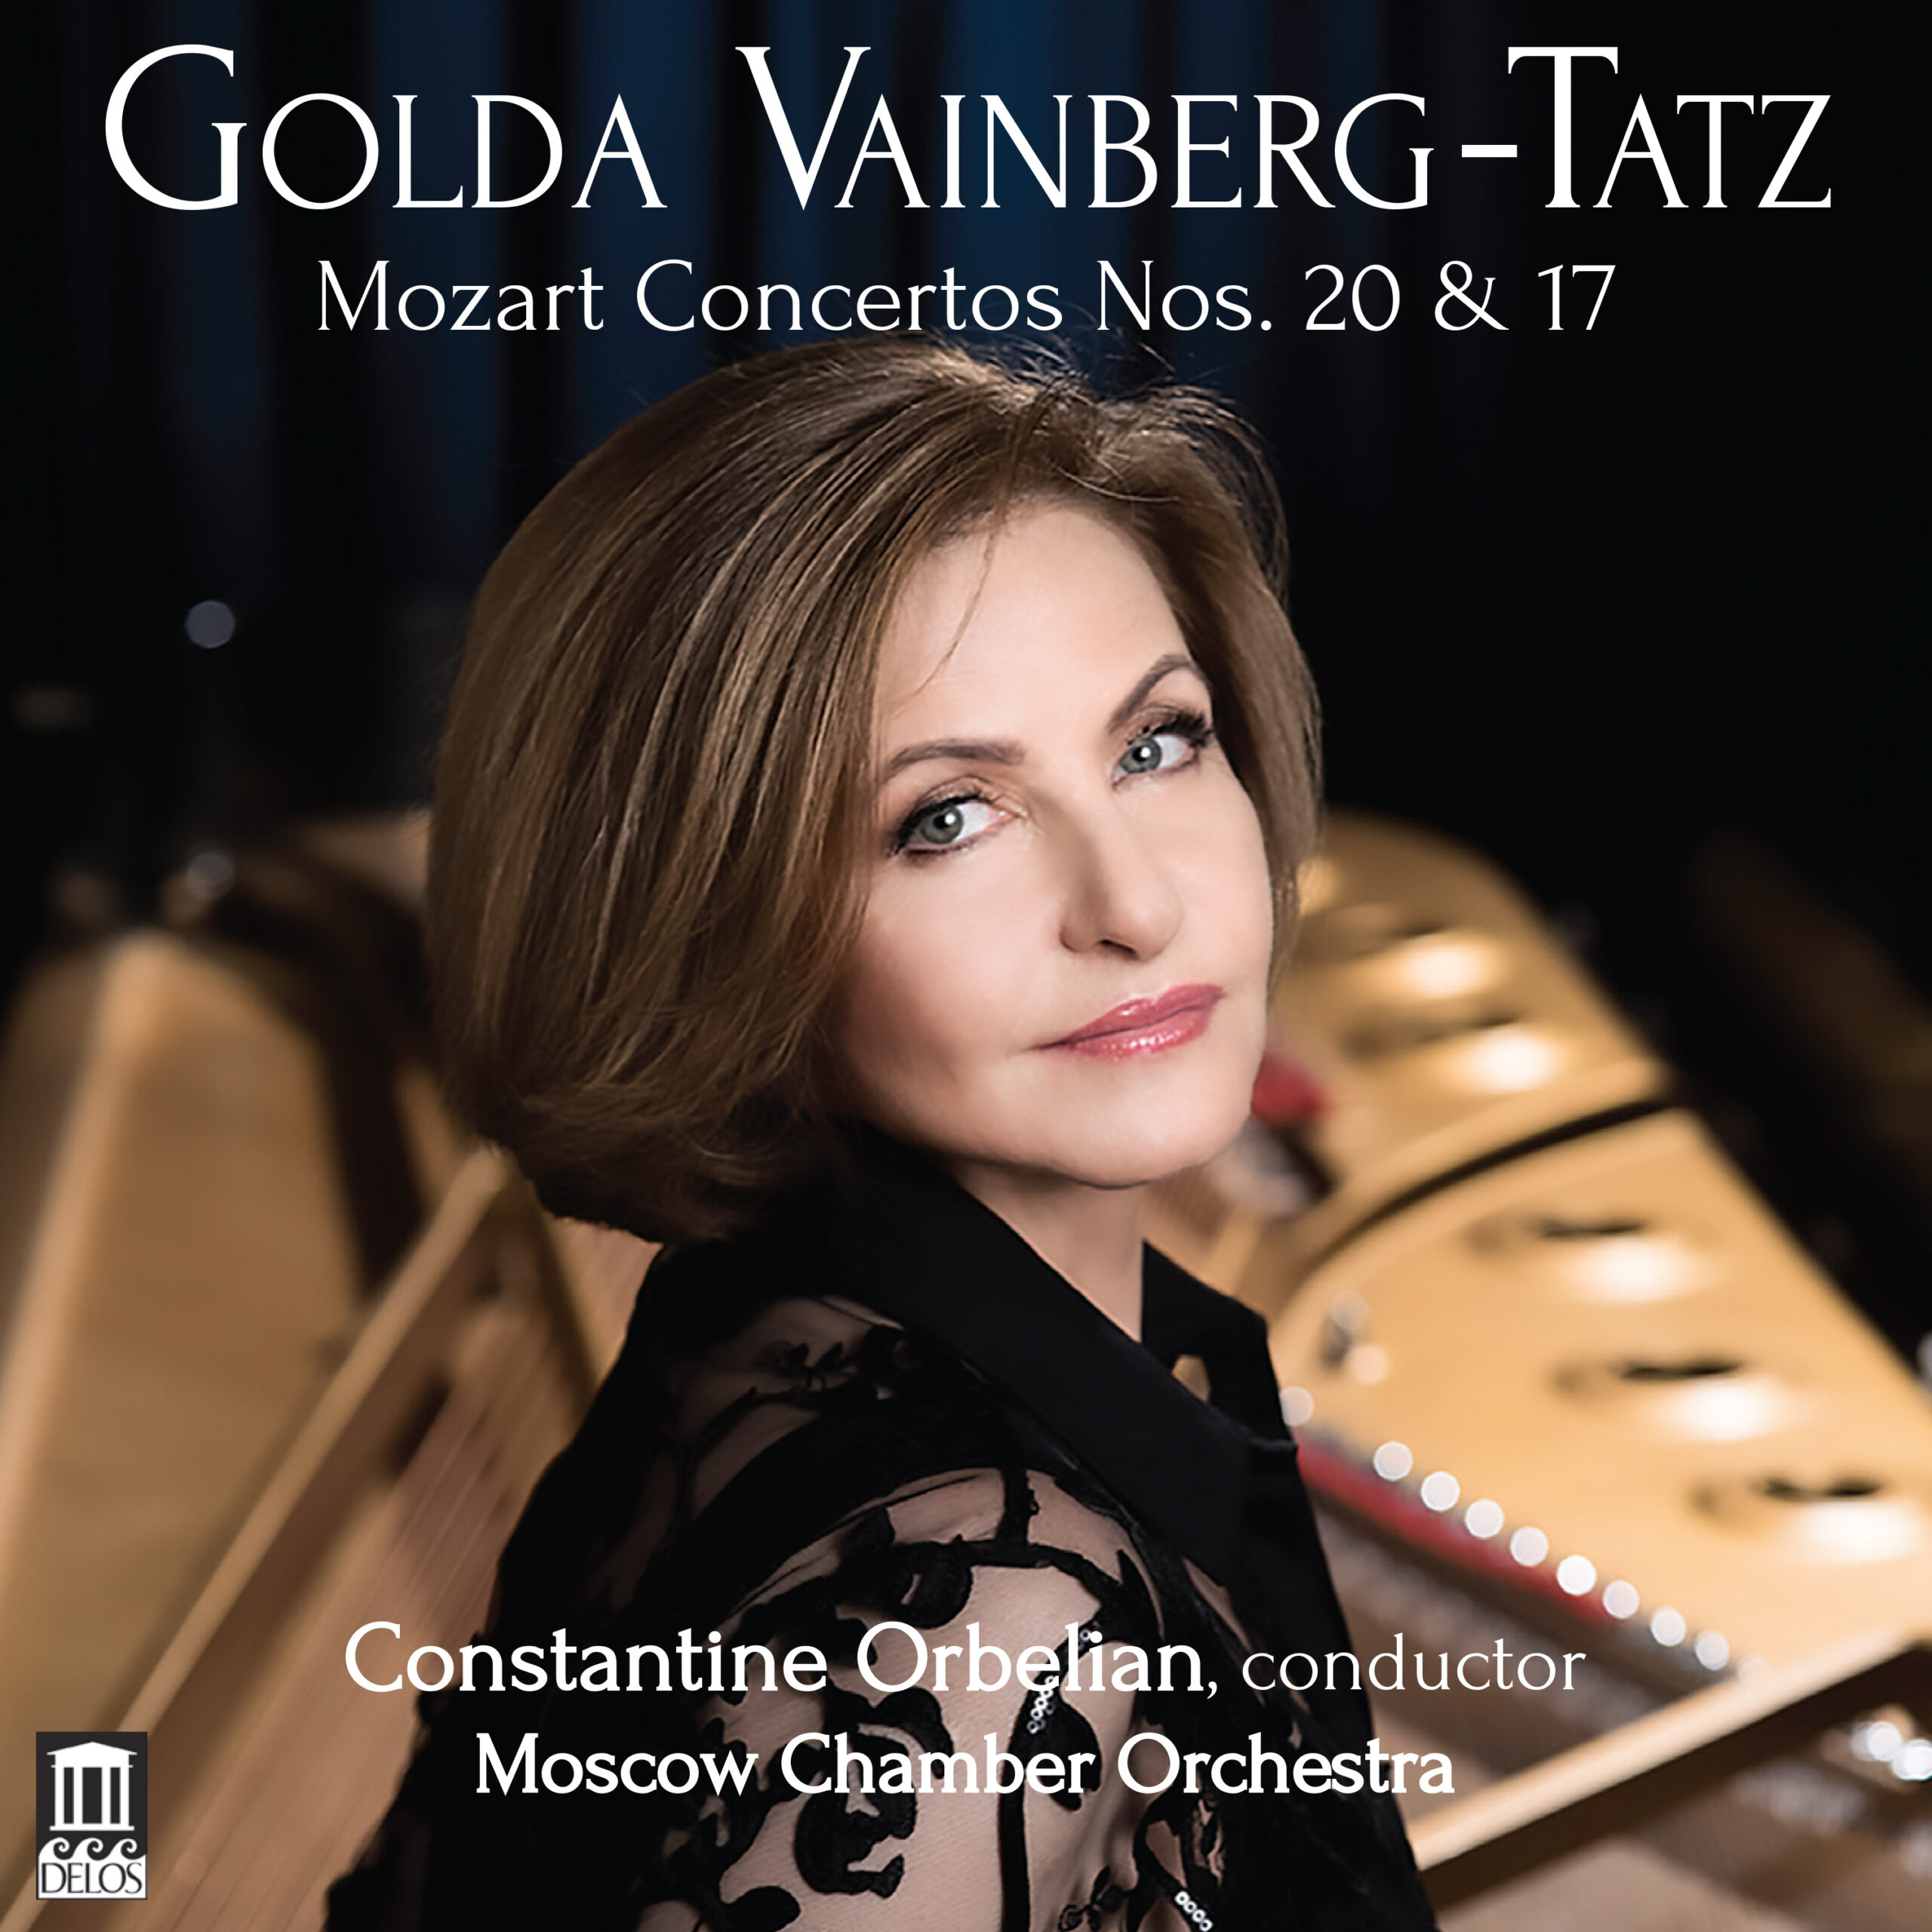 Golda Vainberg-Tatz - Mozart Concertos Nos. 20 & 17